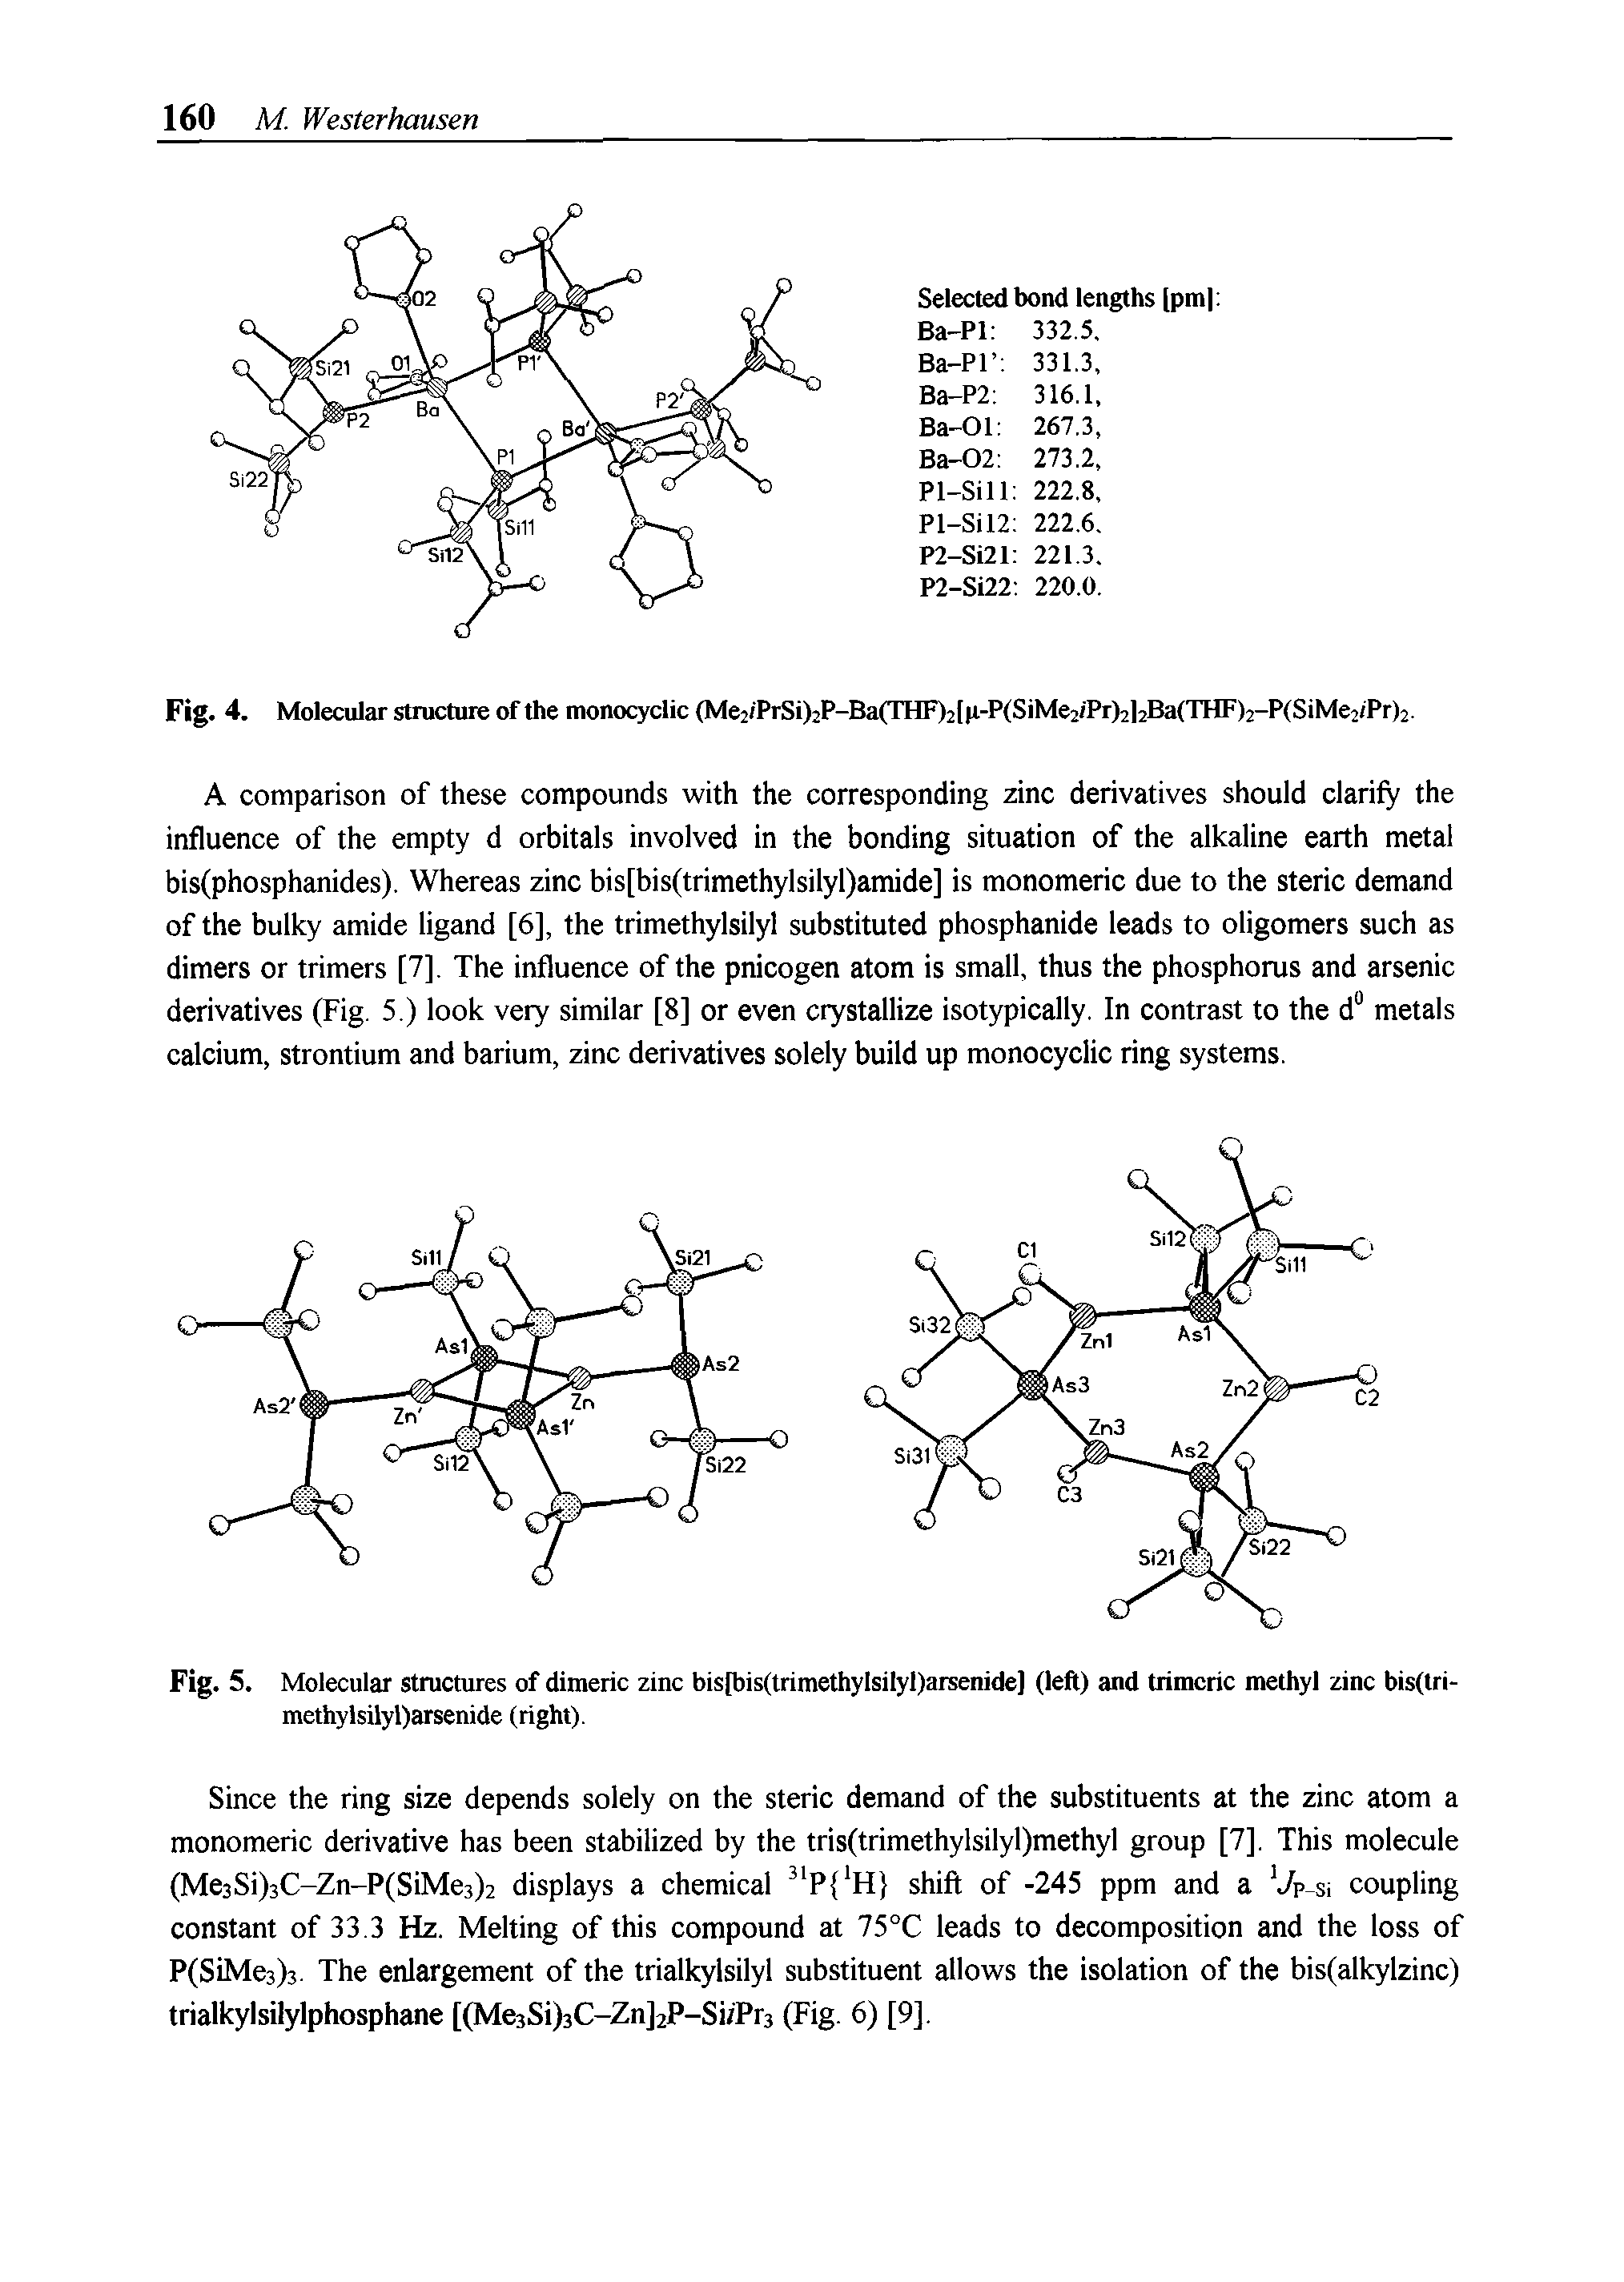 Fig. 5. Molecular structures of dimeric zinc bis[bis(trimethylsilyl)arsenide] (left) and trimcric methyl zinc bis(tri-methylsilyl)arsenide (right).